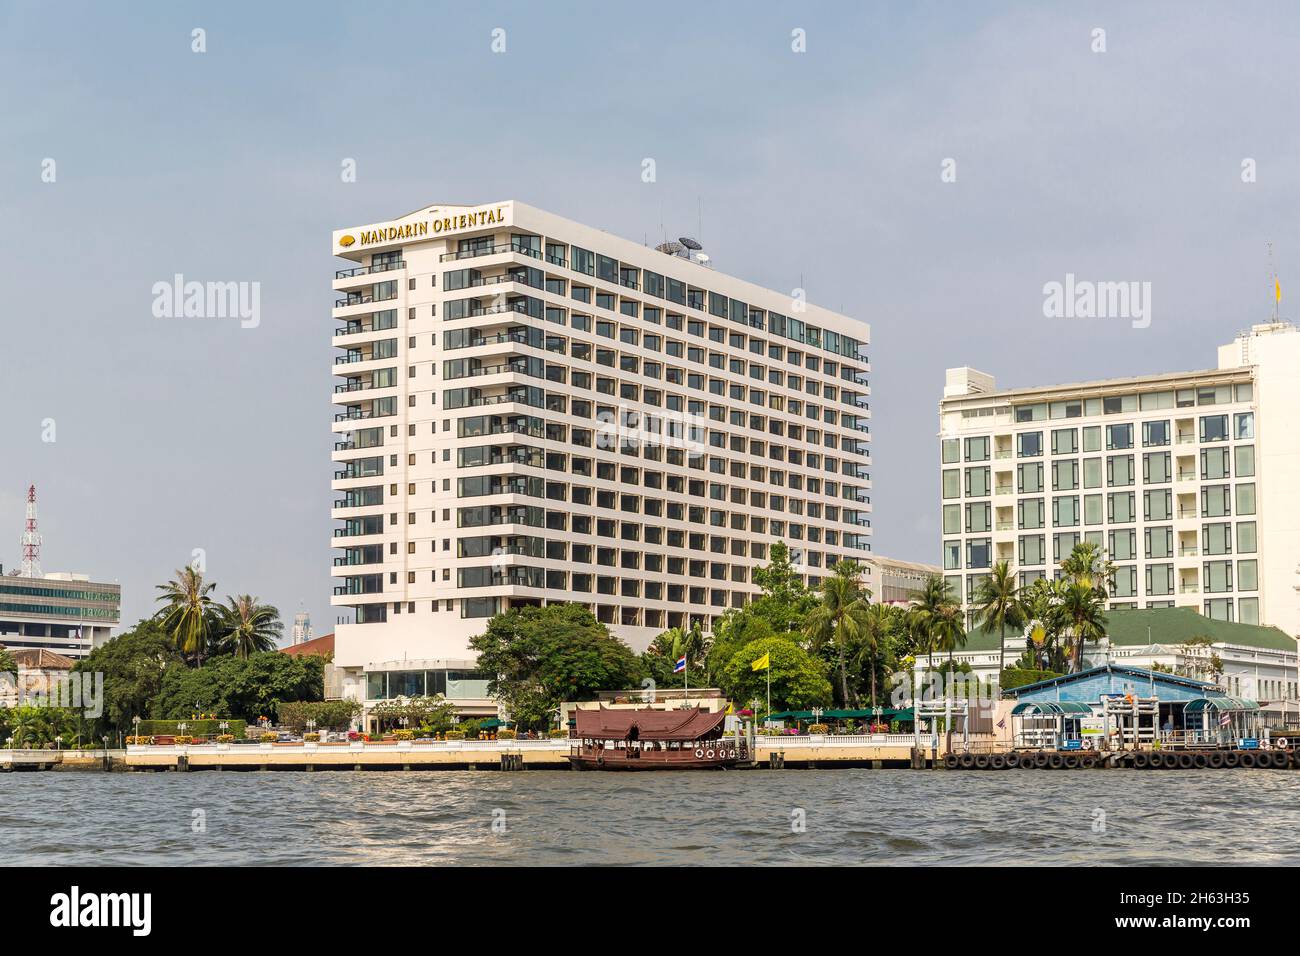 mandarin oriental,hotel,chao phraya river,bangkok,thailand,asia Stock Photo